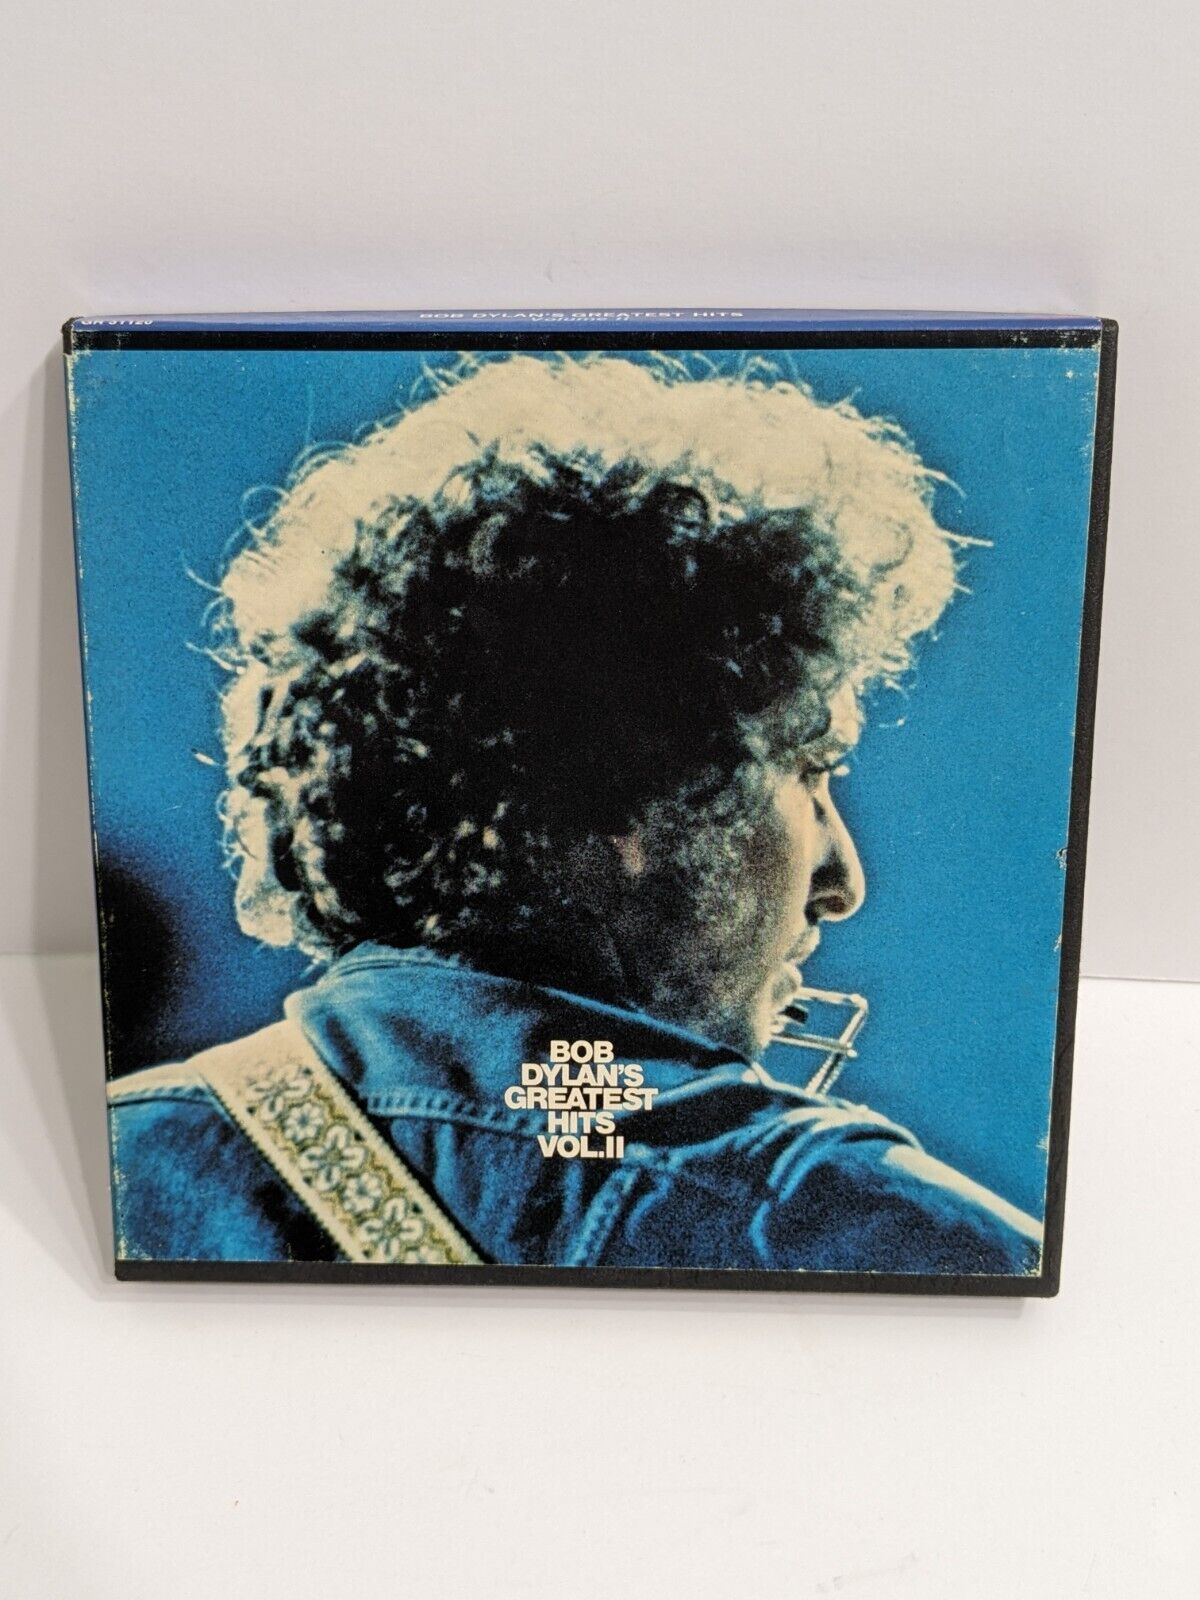 4-track reel tape BOB DYLAN Greatest Hits Vol II Columbia 1971 classic rock folk